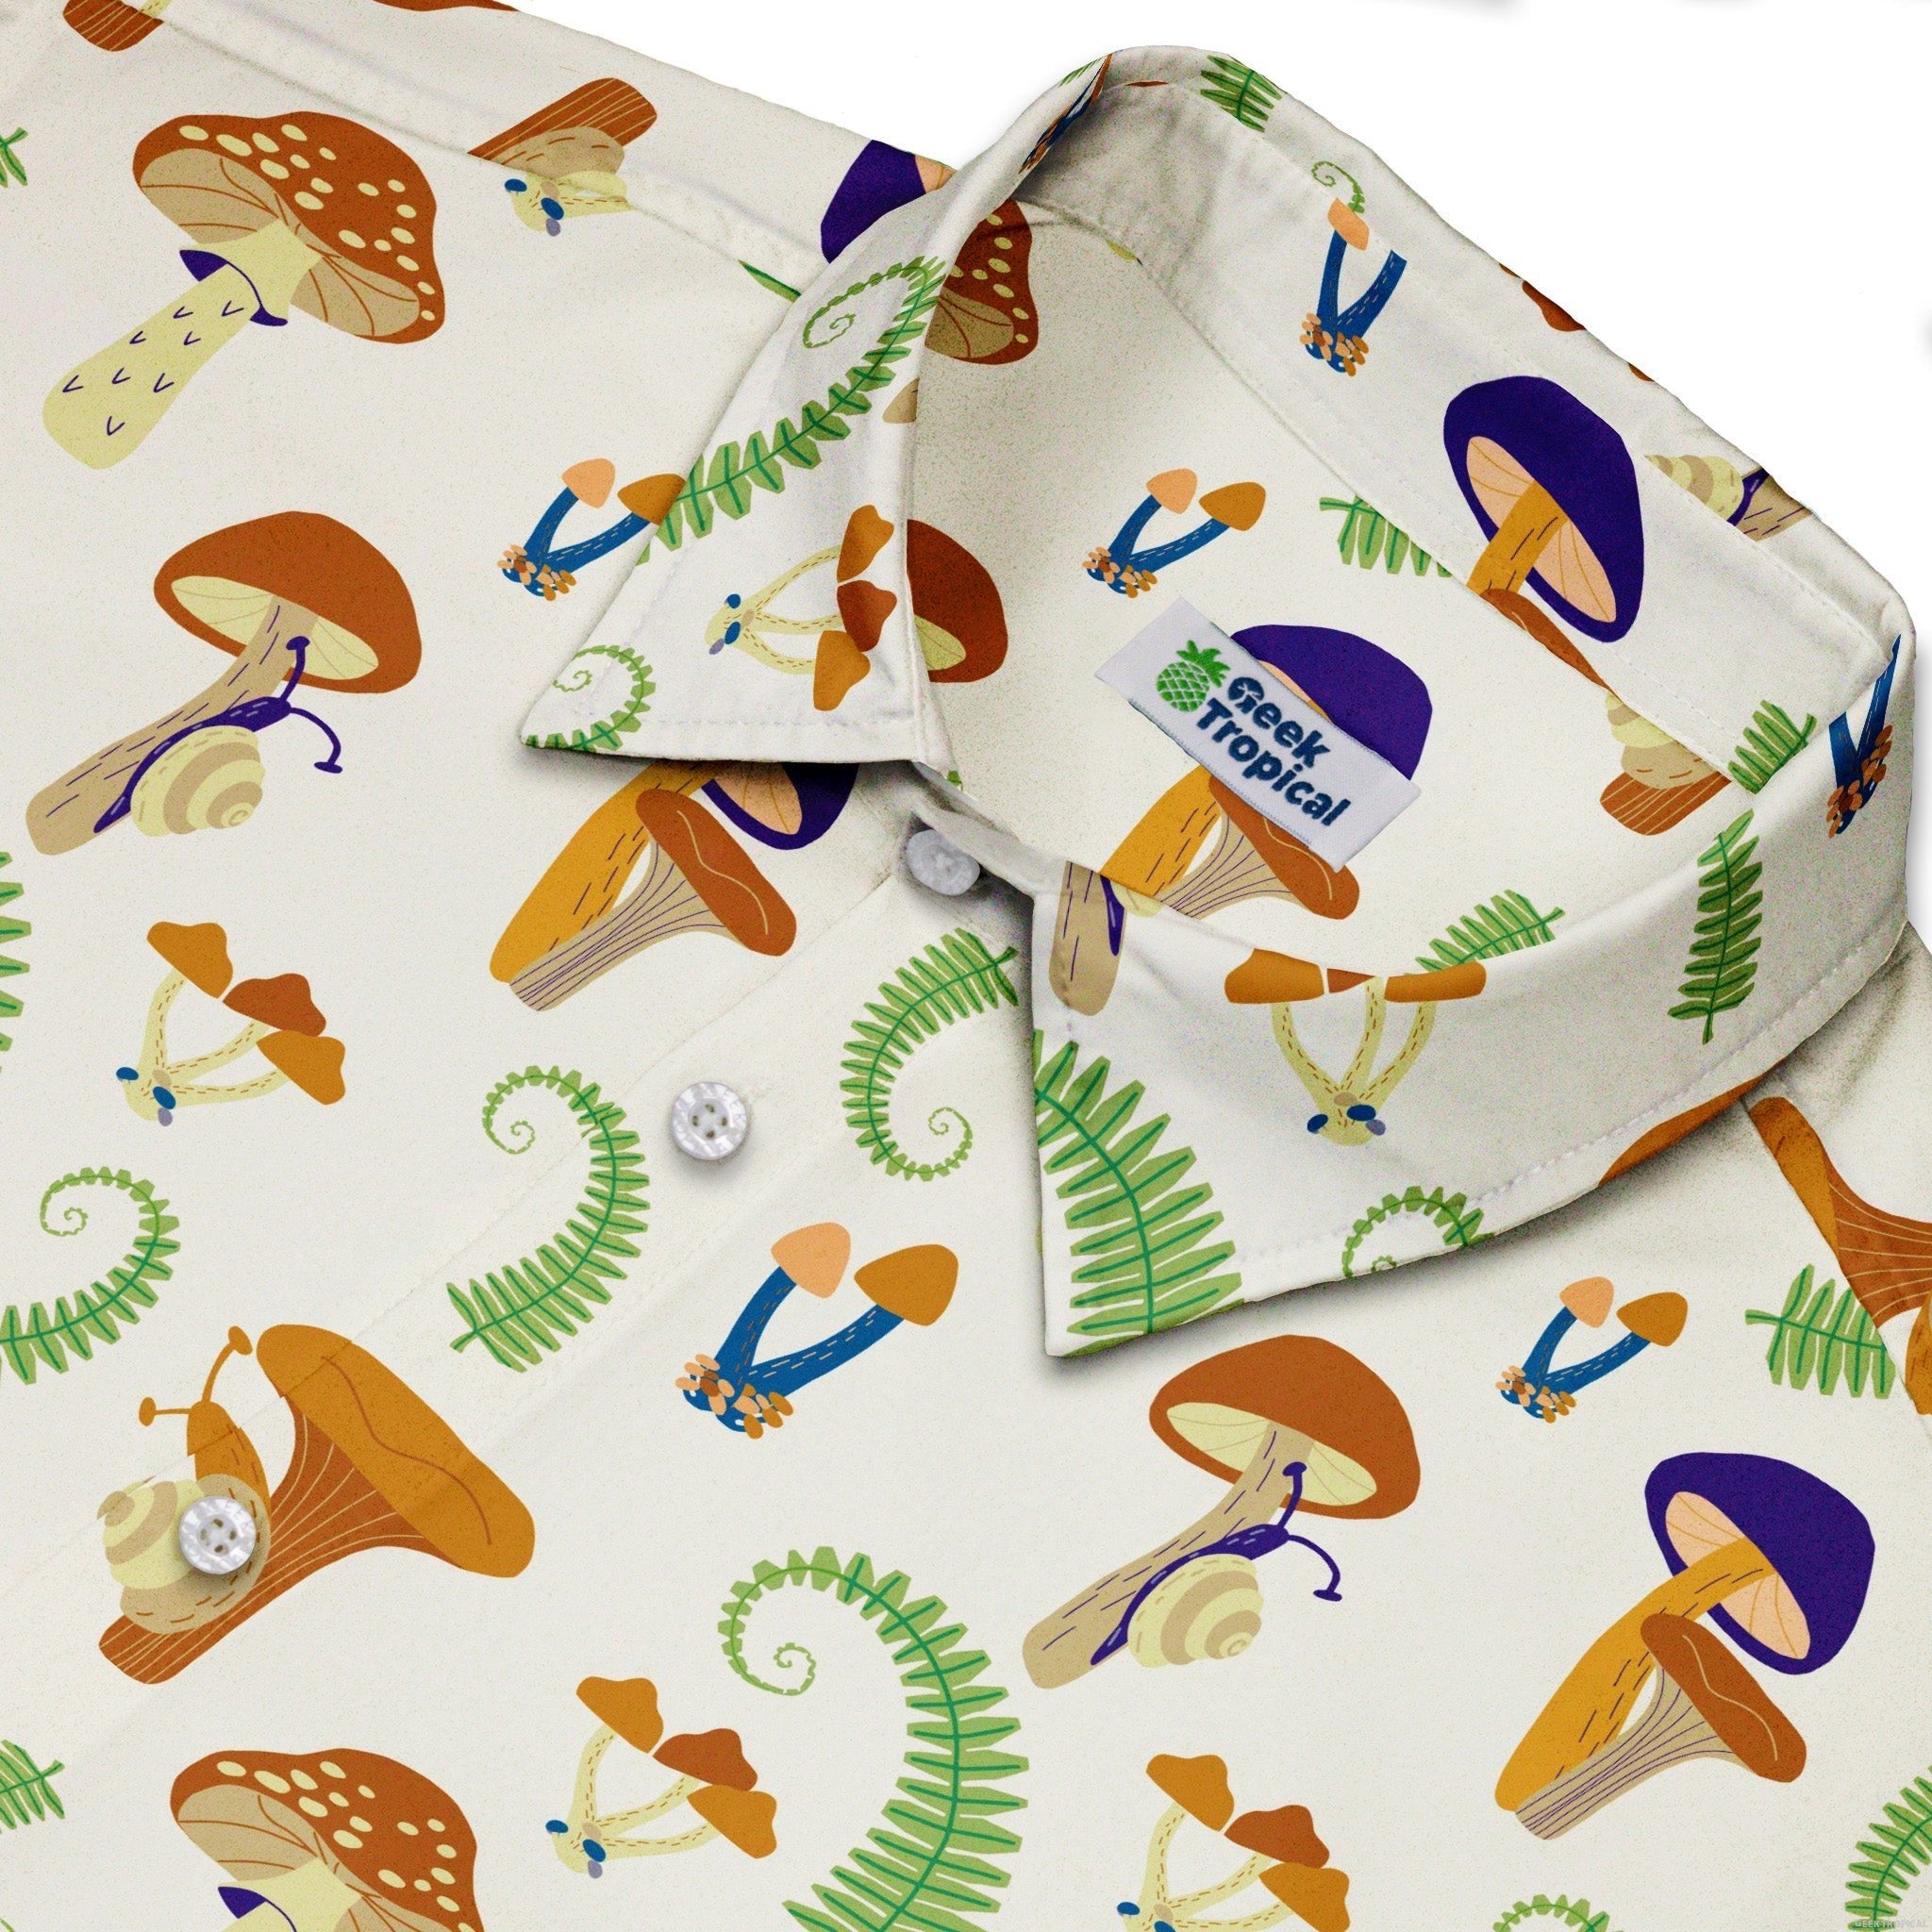 Snails and Mushrooms Botany Button Up Shirt - adult sizing - Botany Print -